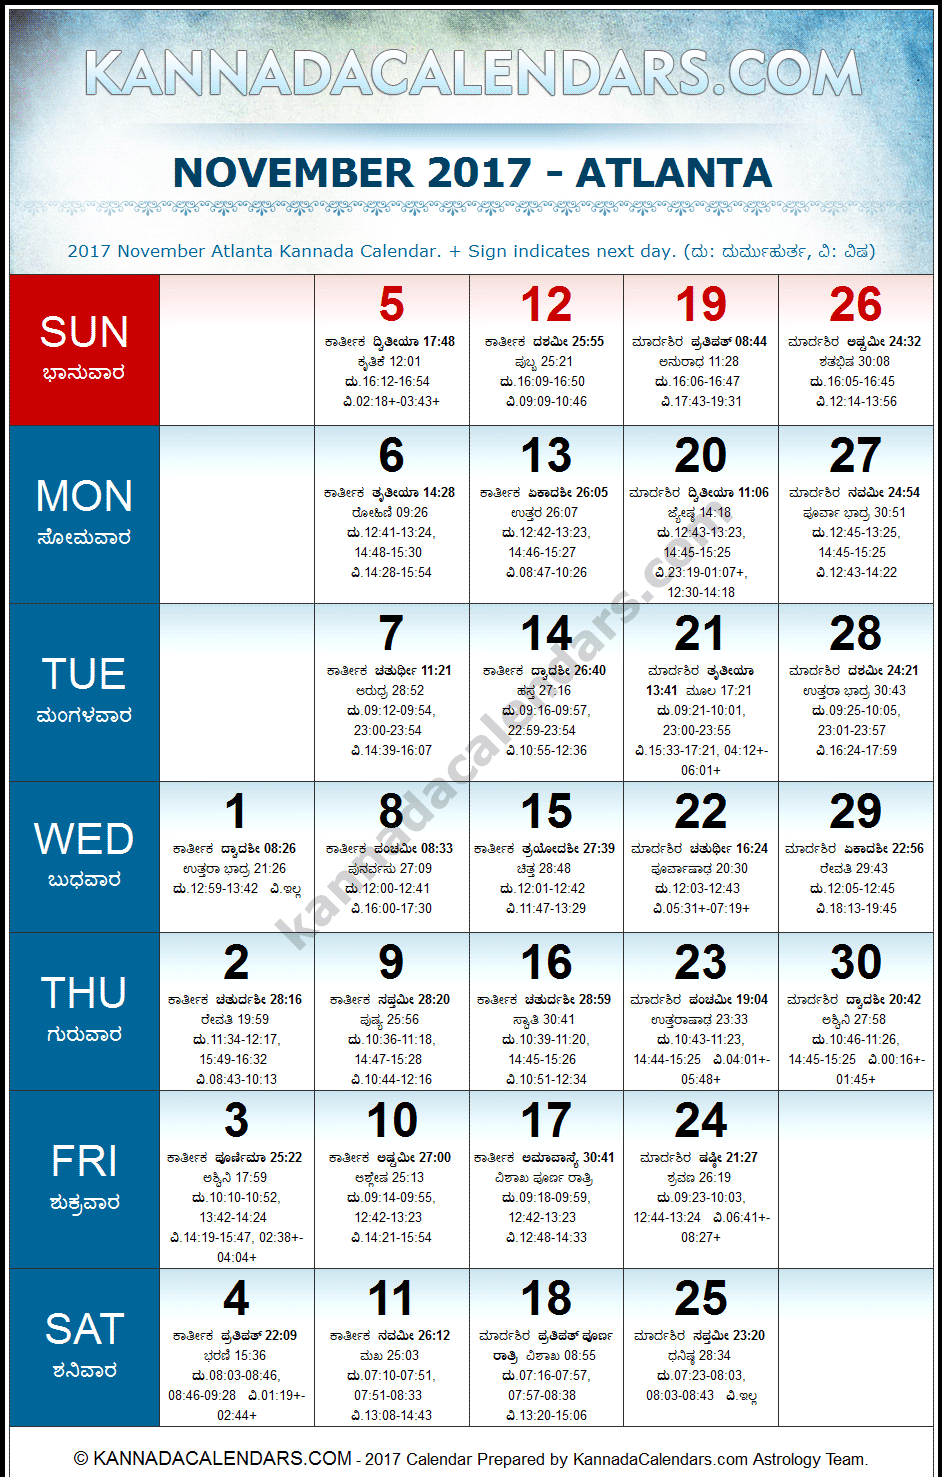 November 2017 Kannada Calendar for Atlanta, USA